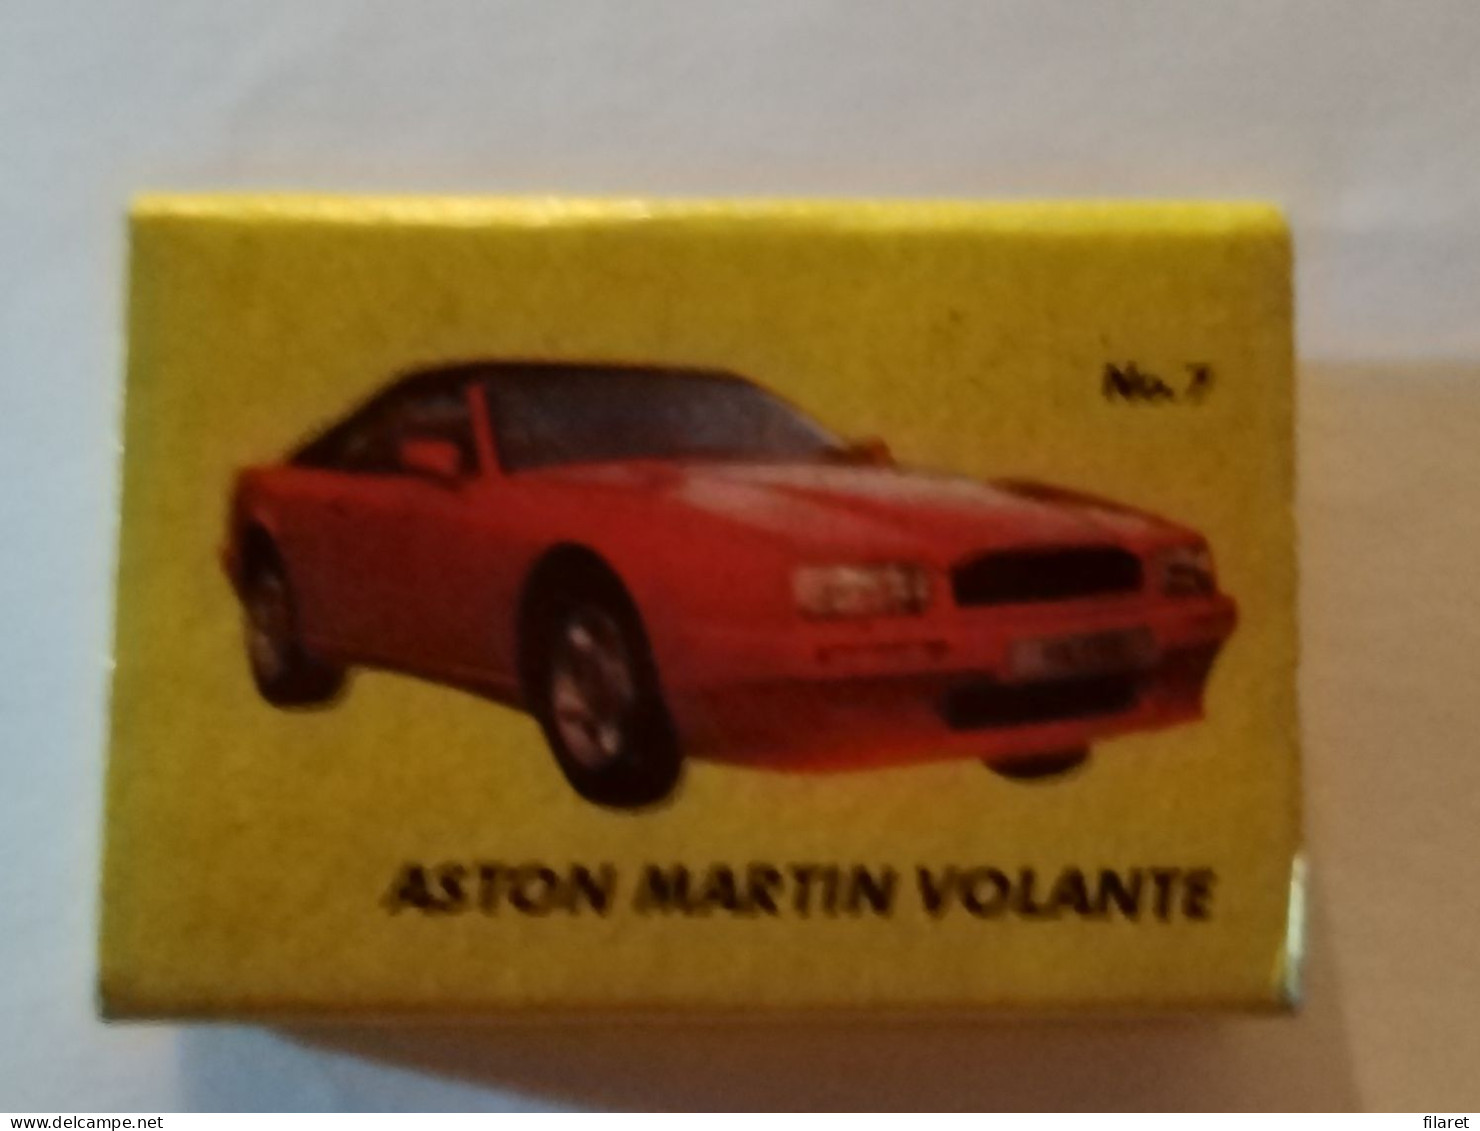 Aston Martin Volante, Car/automobile,MALAZLAR FACTORY,Turcia,matchbox - Scatole Di Fiammiferi